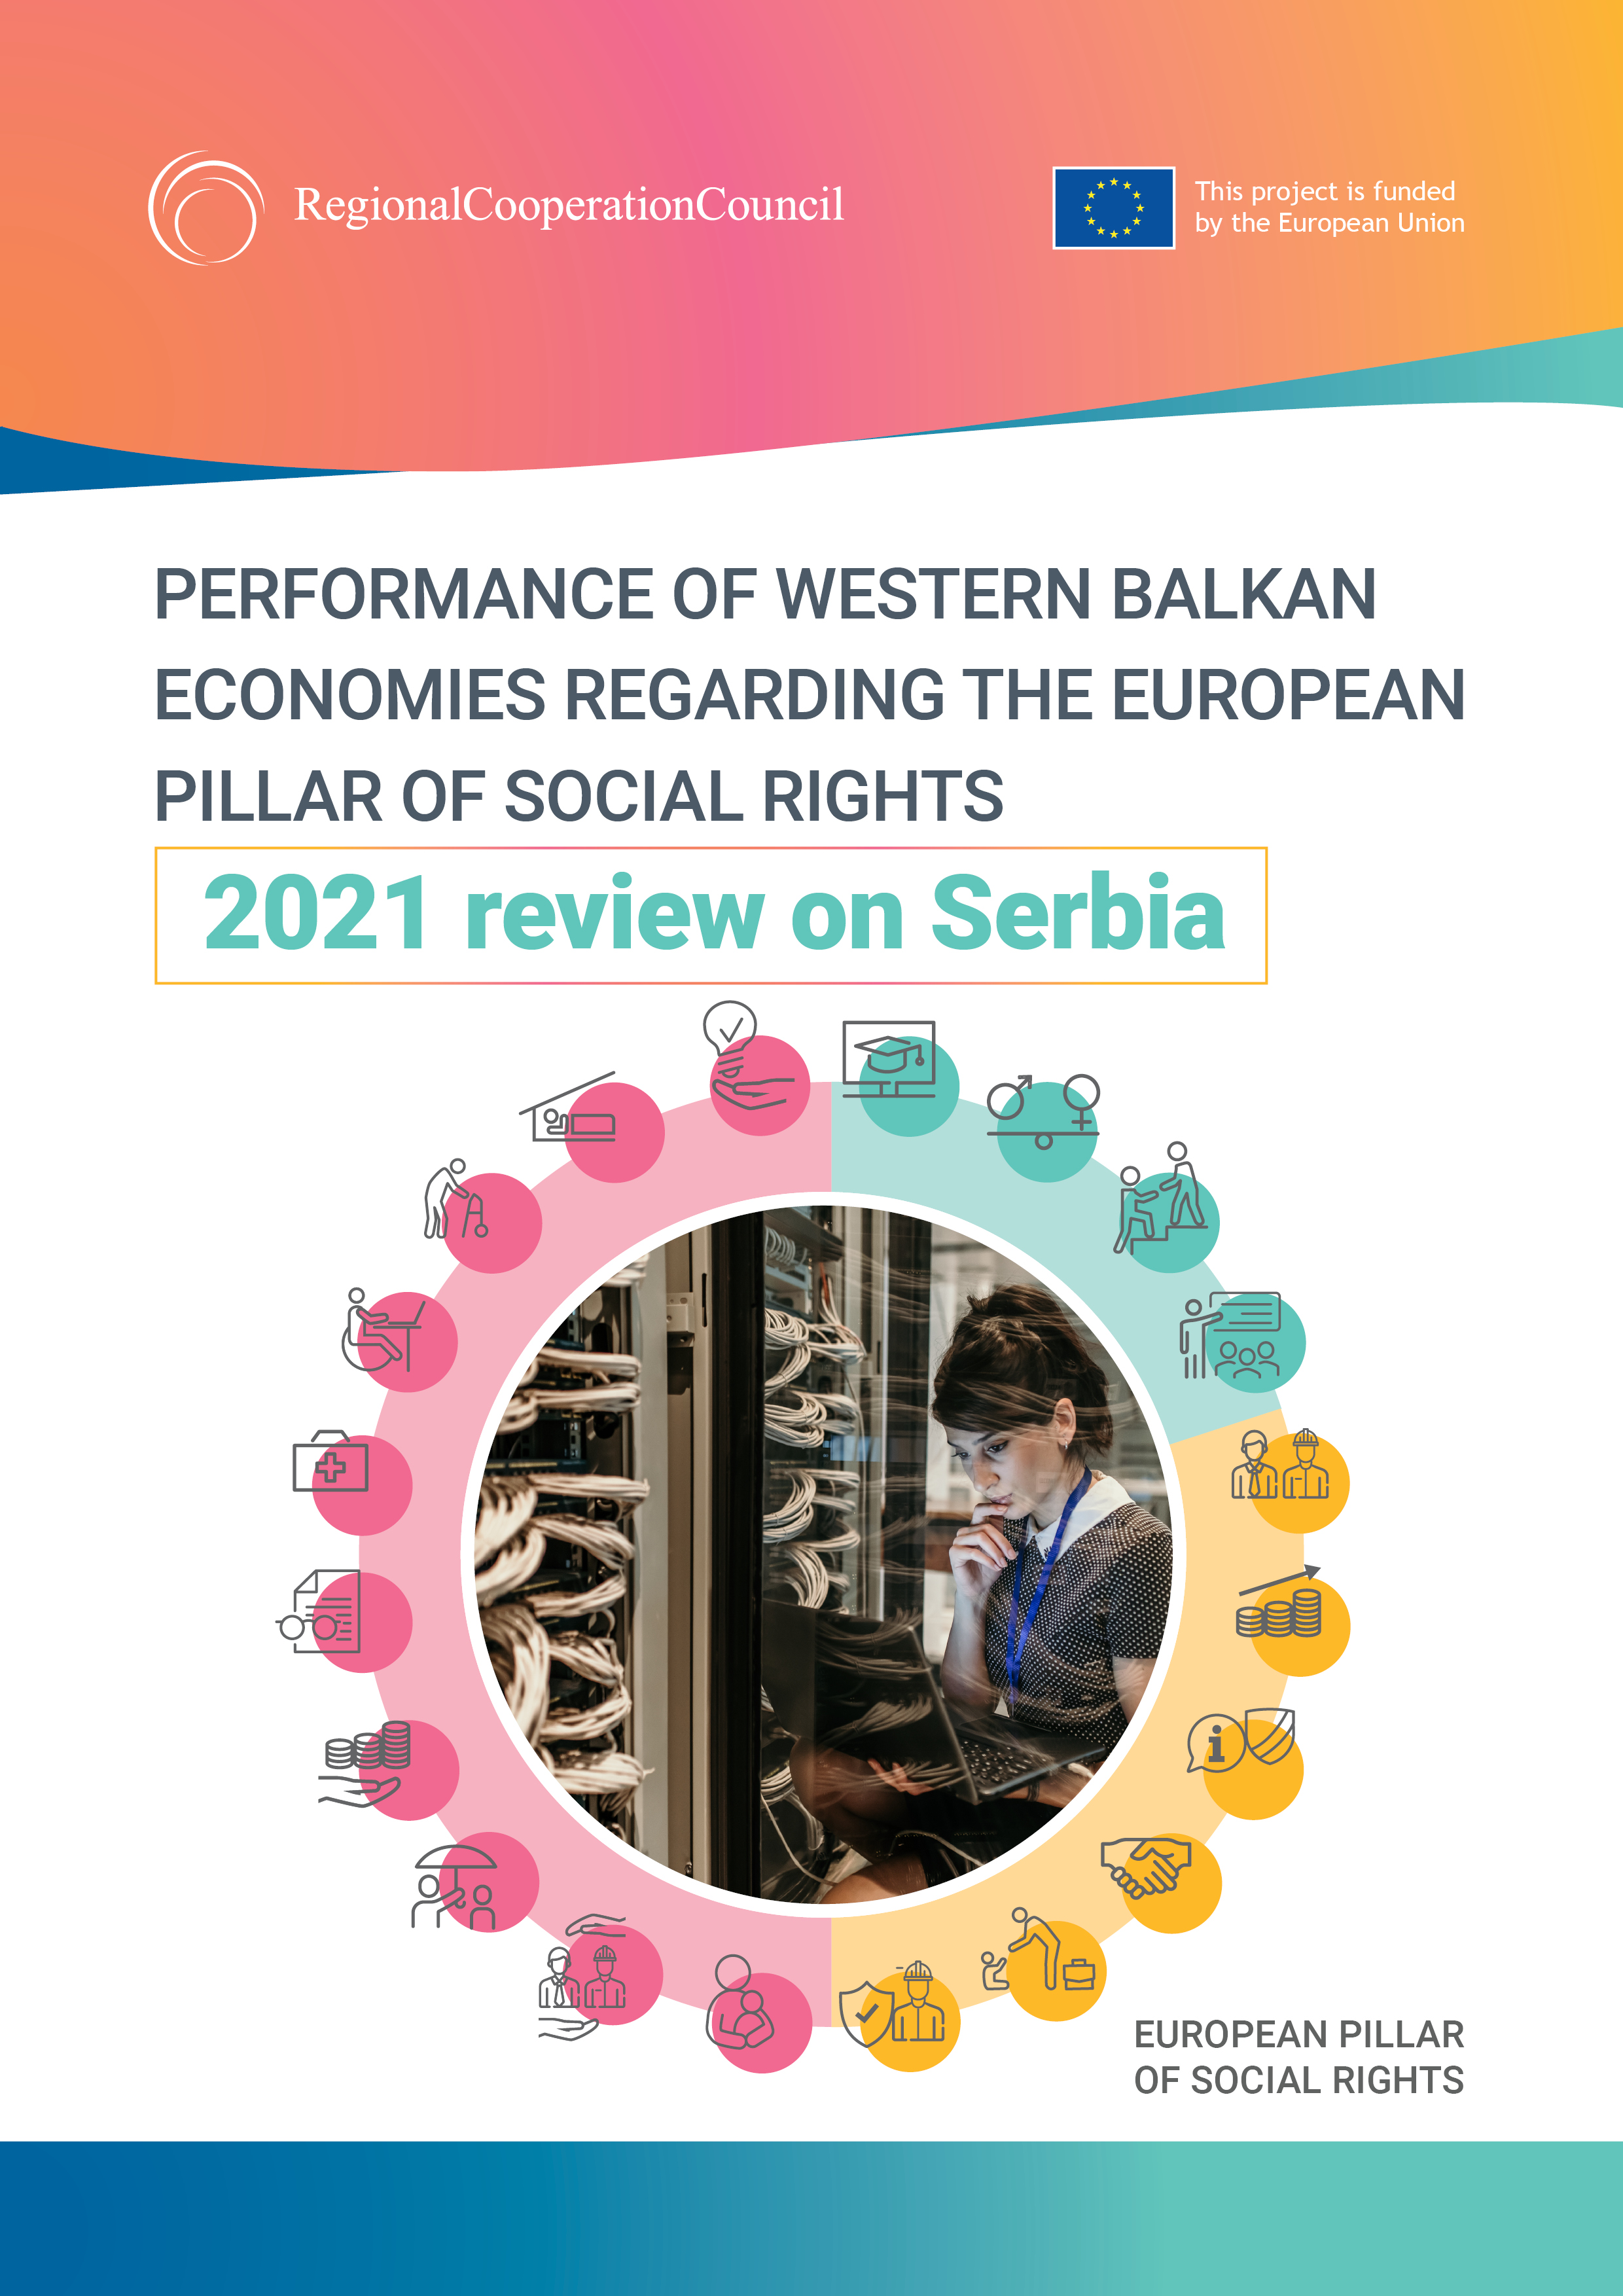 RCC ESAP 2: Performance of Western Balkan Economies Regarding the European Pillar of Social Rights: 2021 review on Serbia